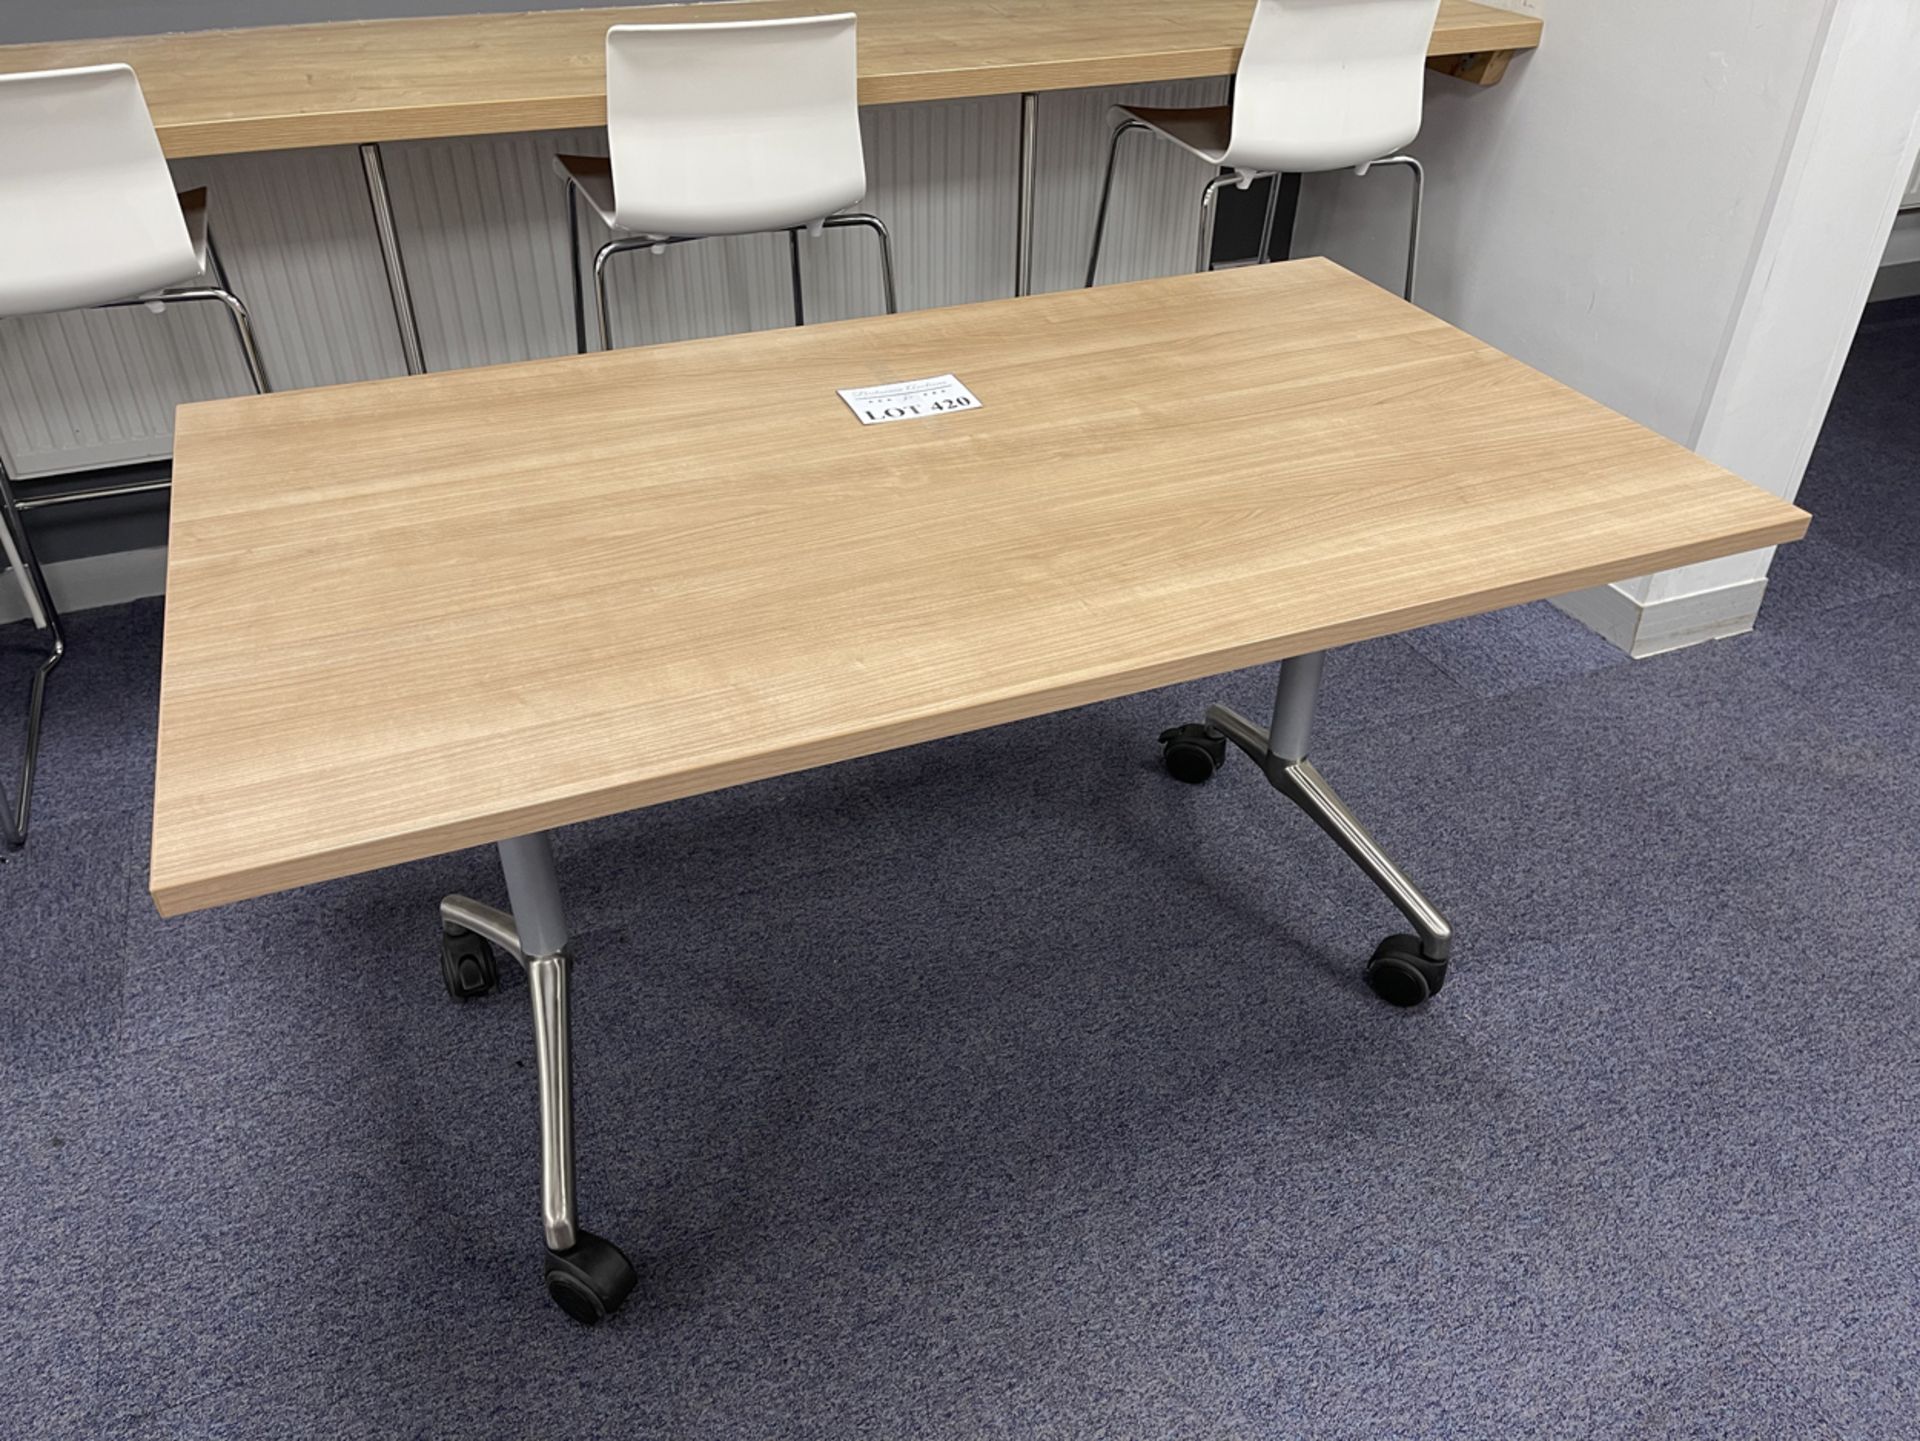 Foldaway Table - 1400mm x 800mm x 730mm High. - Image 4 of 4